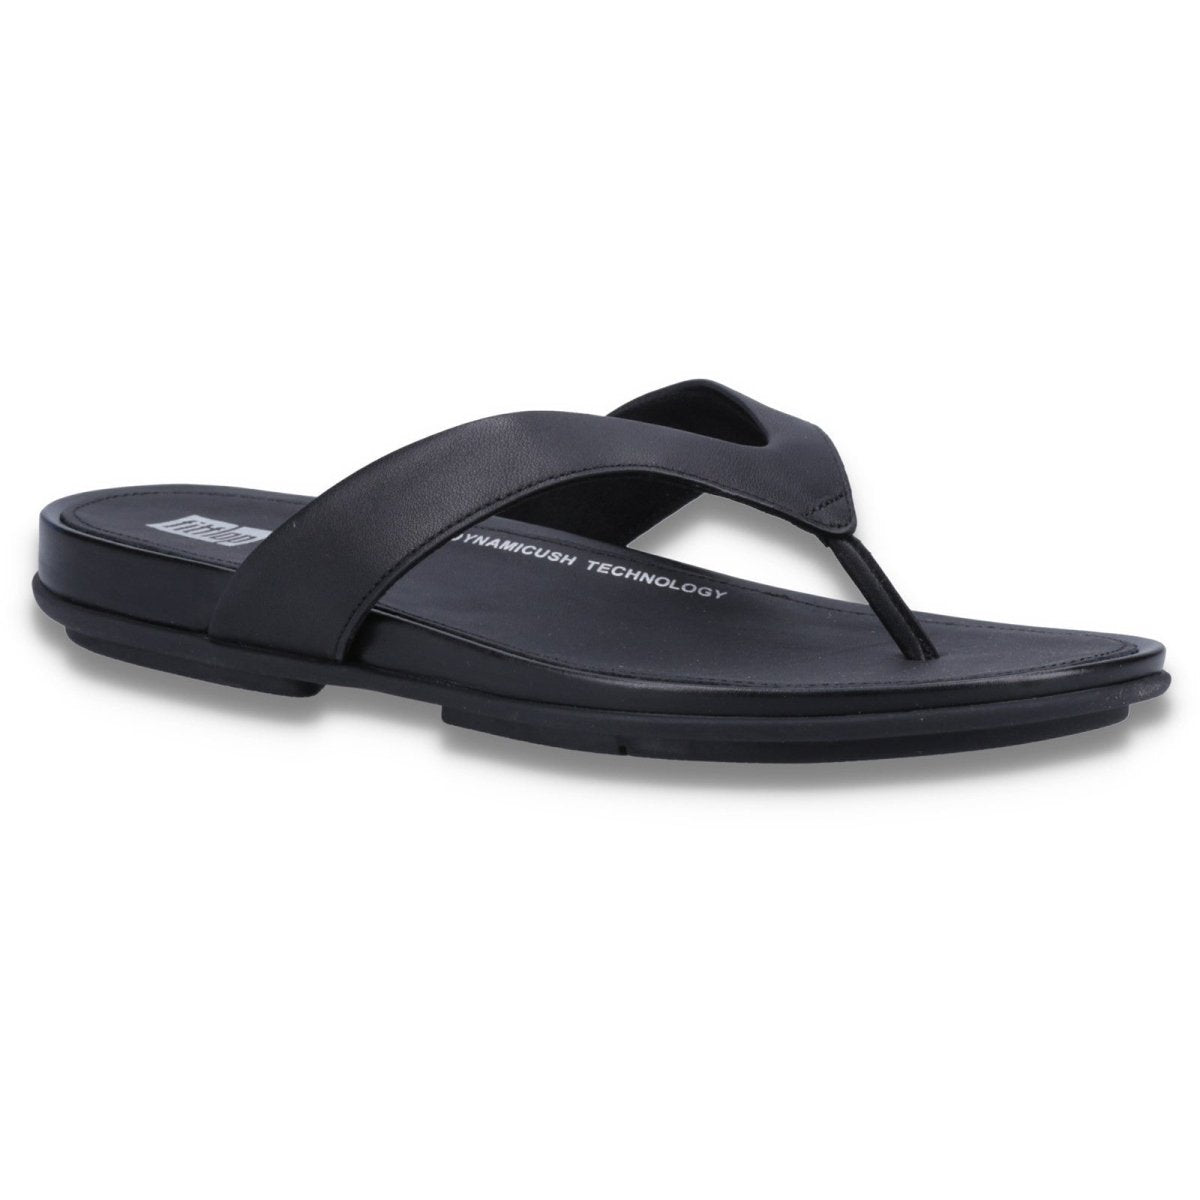 Fitflop Gracie Ladies Leather Toe-Post Summer Flip-Flop Sandals - Shoe Store Direct